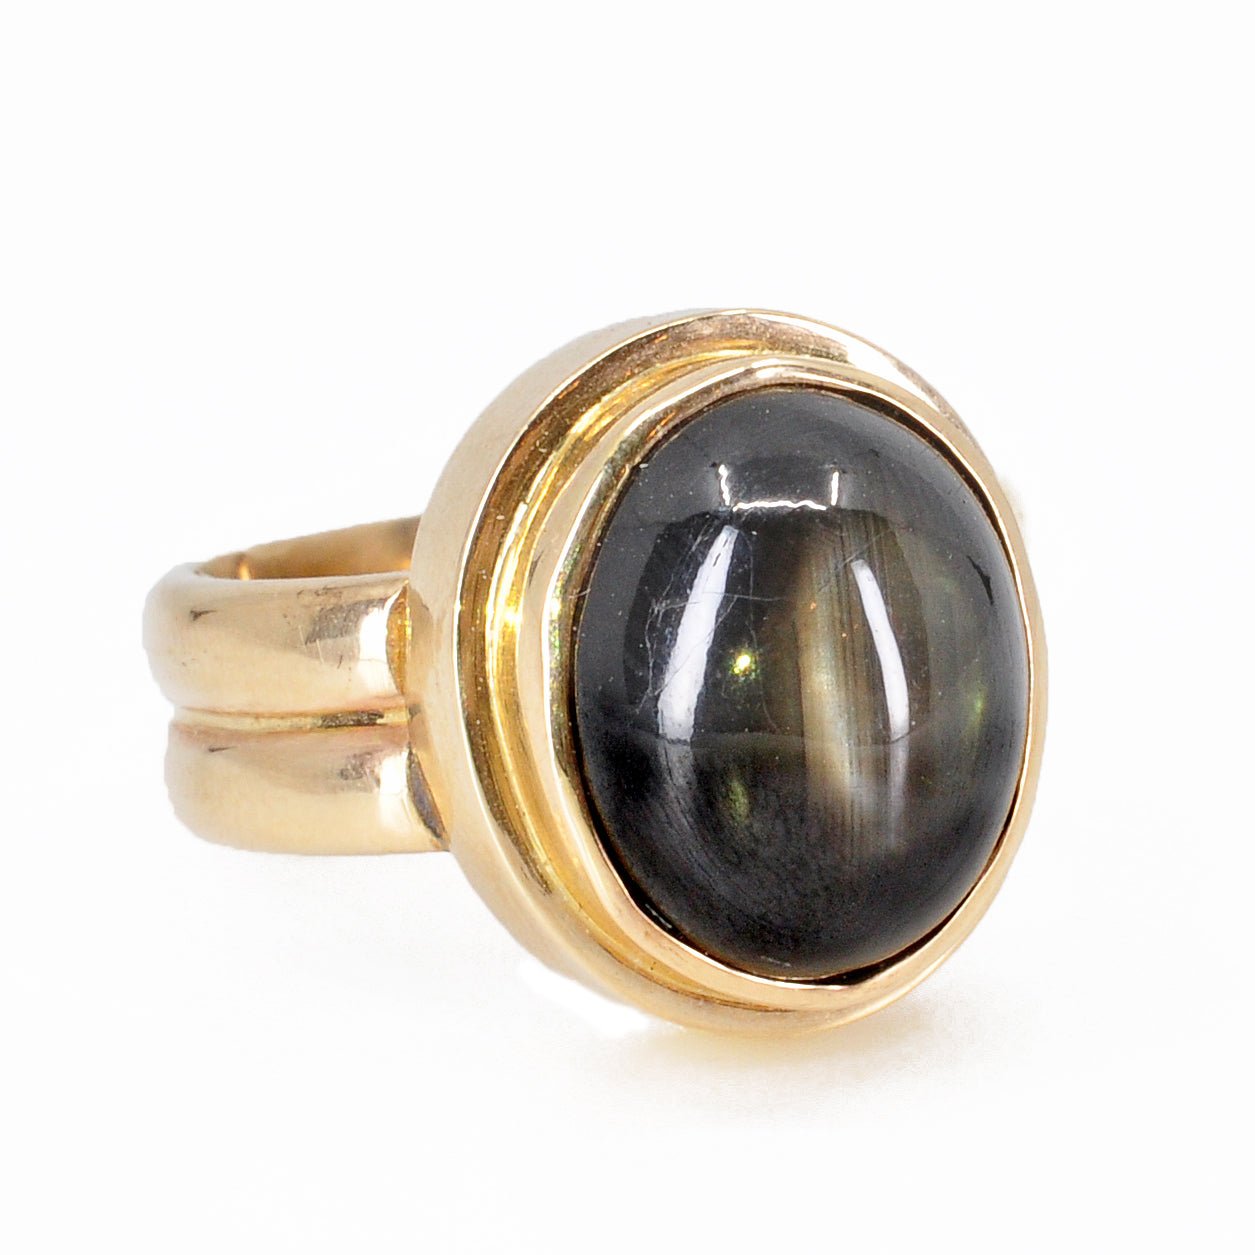 Black Star Sapphire 22 mm 16.26 ct Oval Cabochon 14K Handcrafted Gemstone Ring - BBO-259 - Crystalarium